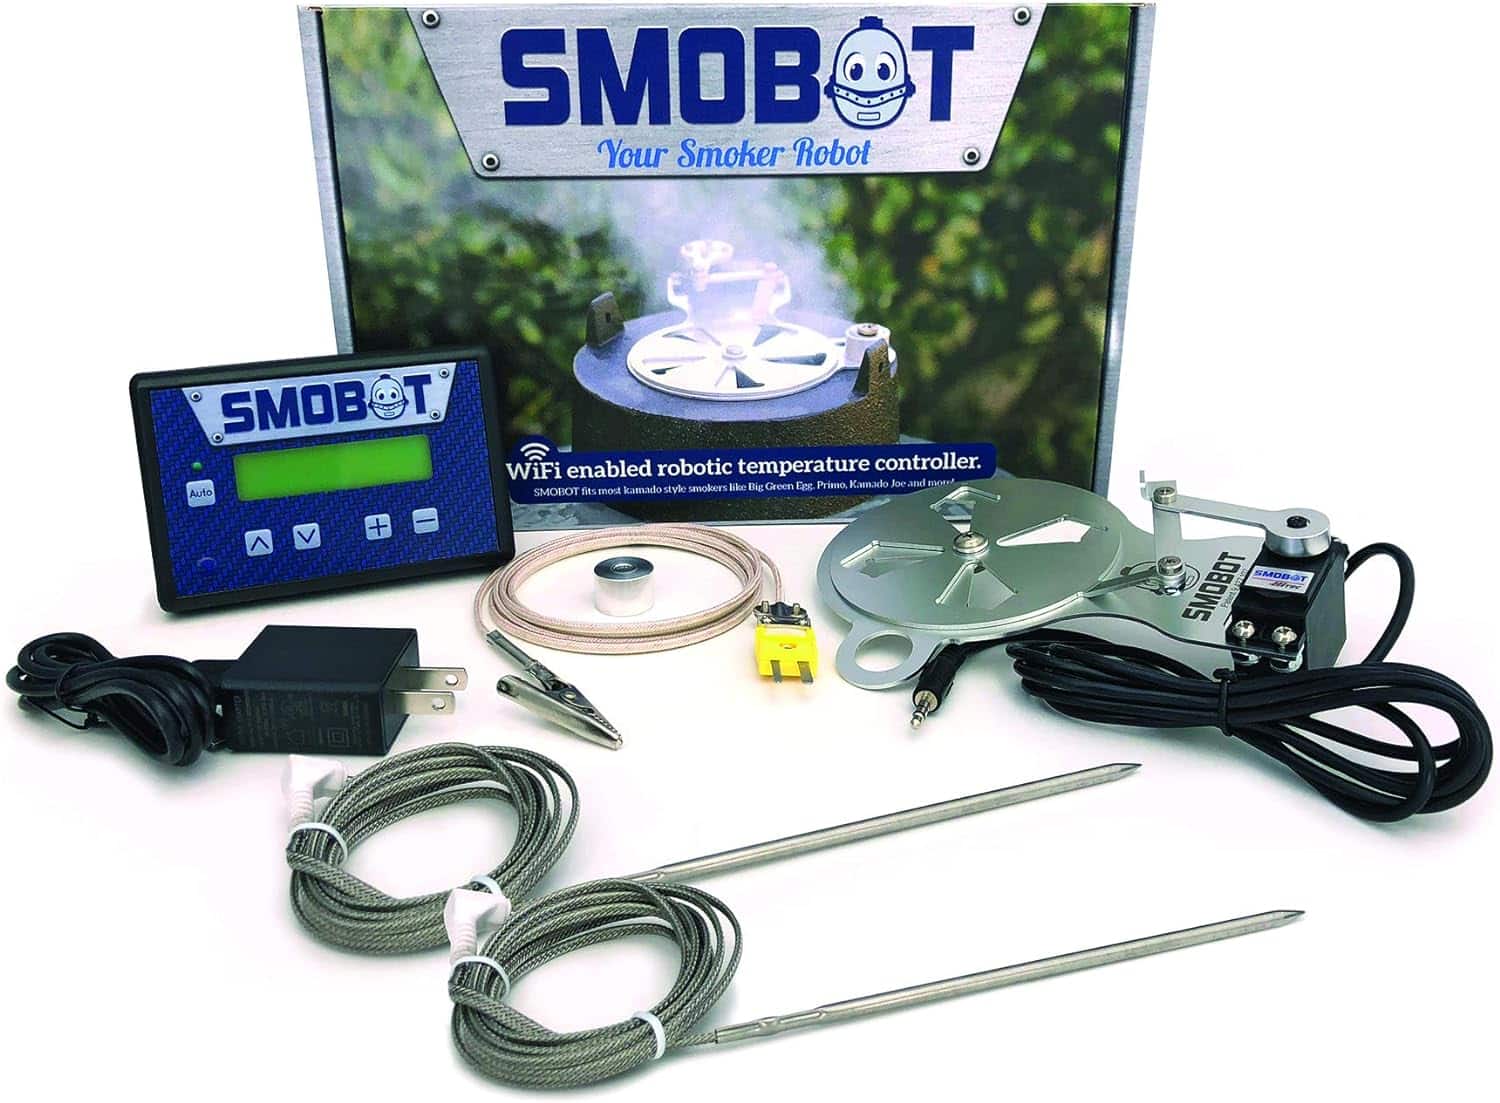 SMOBOT Kamado Grill and Smoker Temperature Controller